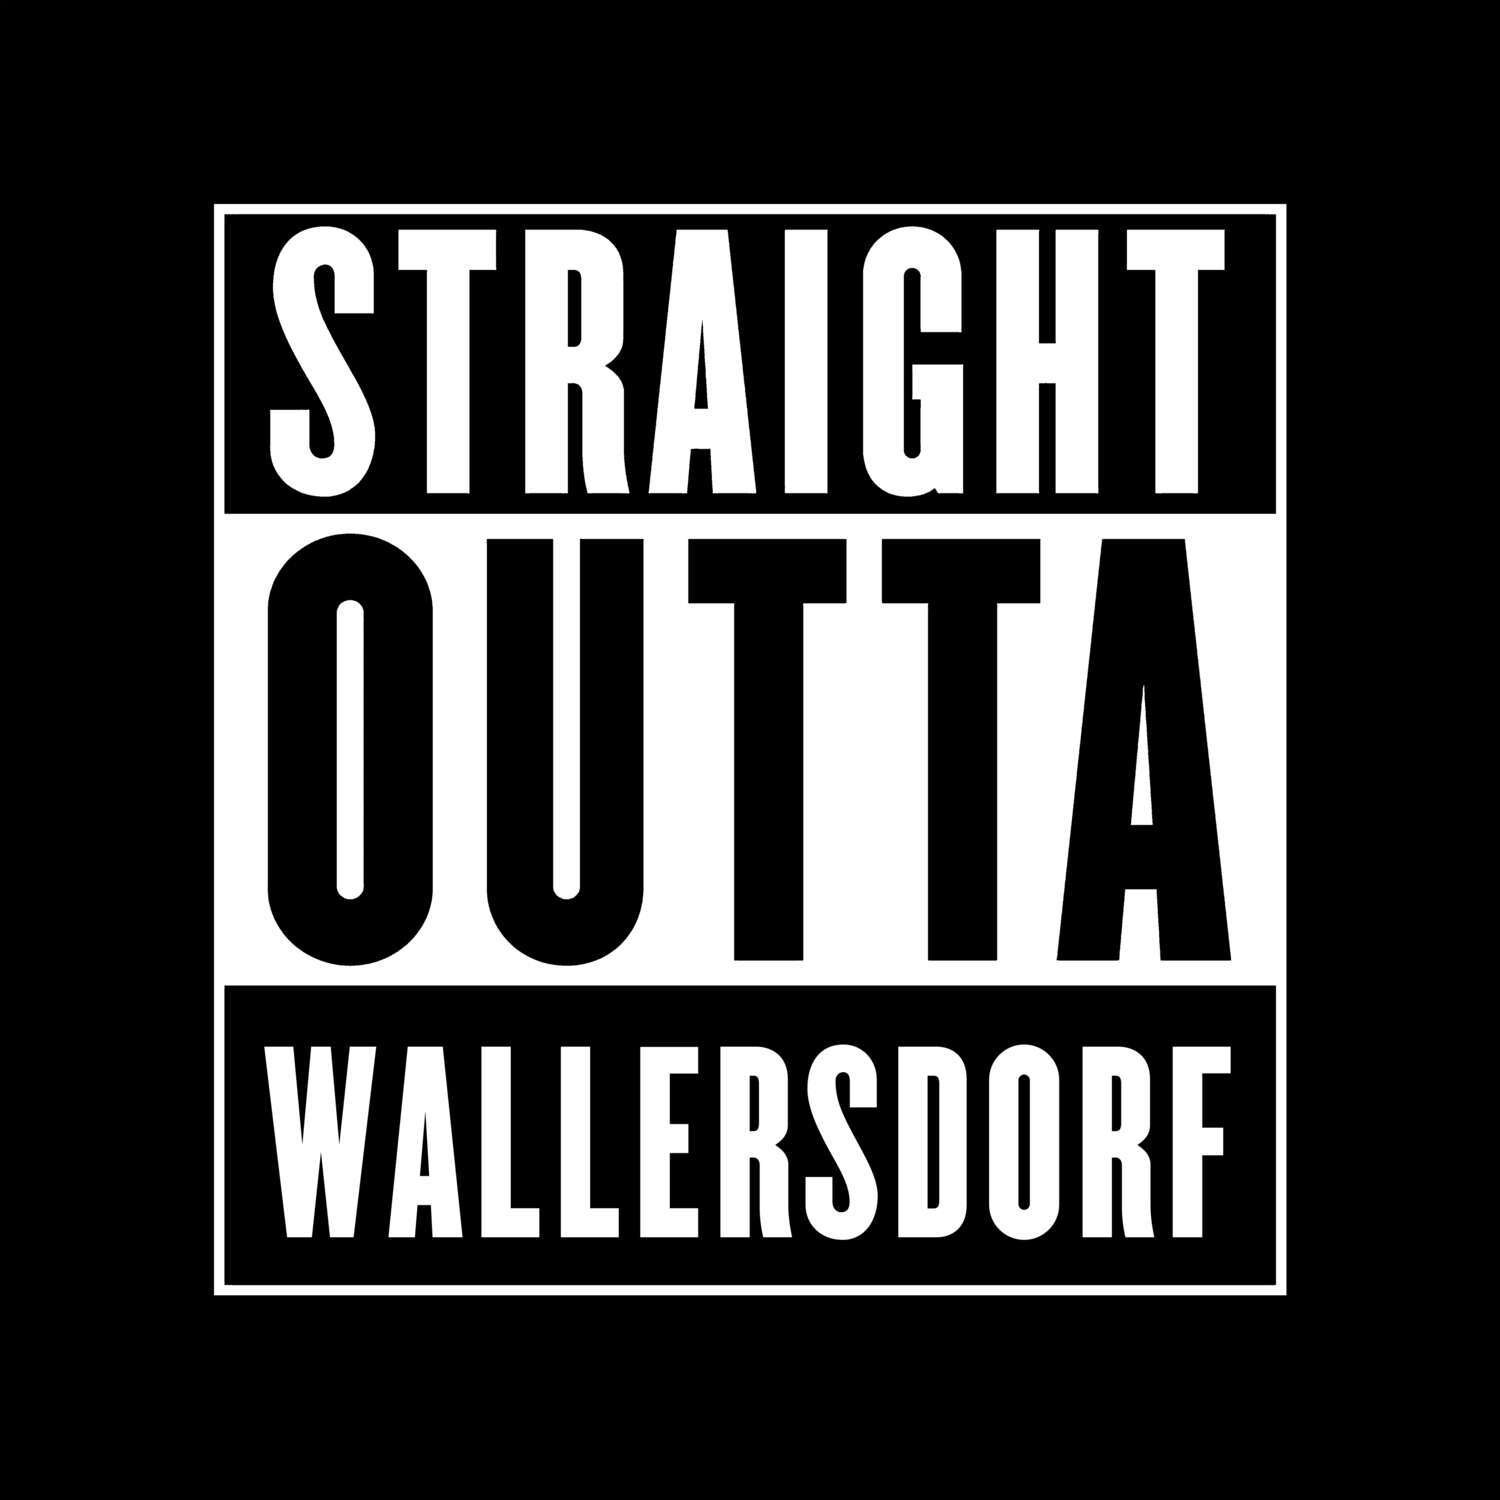 Wallersdorf T-Shirt »Straight Outta«